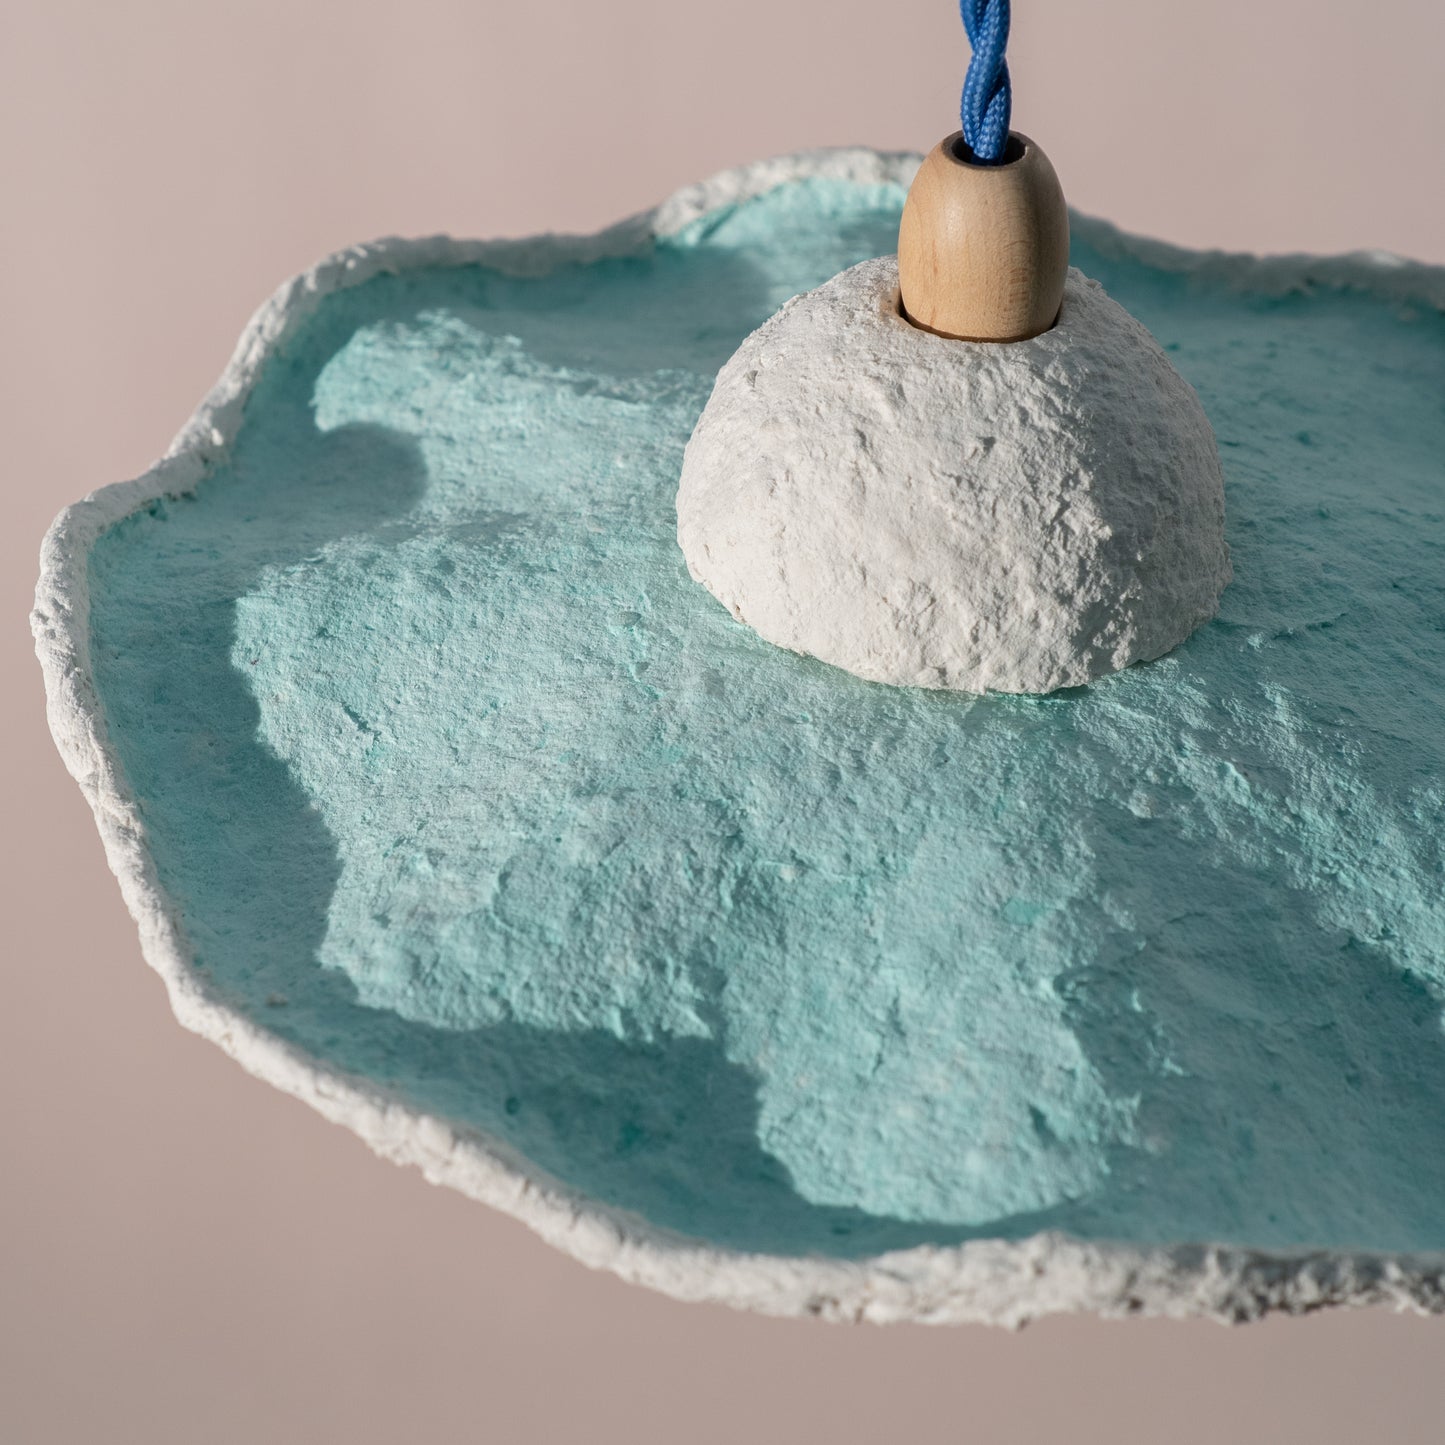 Artisan Series: "Paper Clay Pendants" (Blue) by Arielle Casale